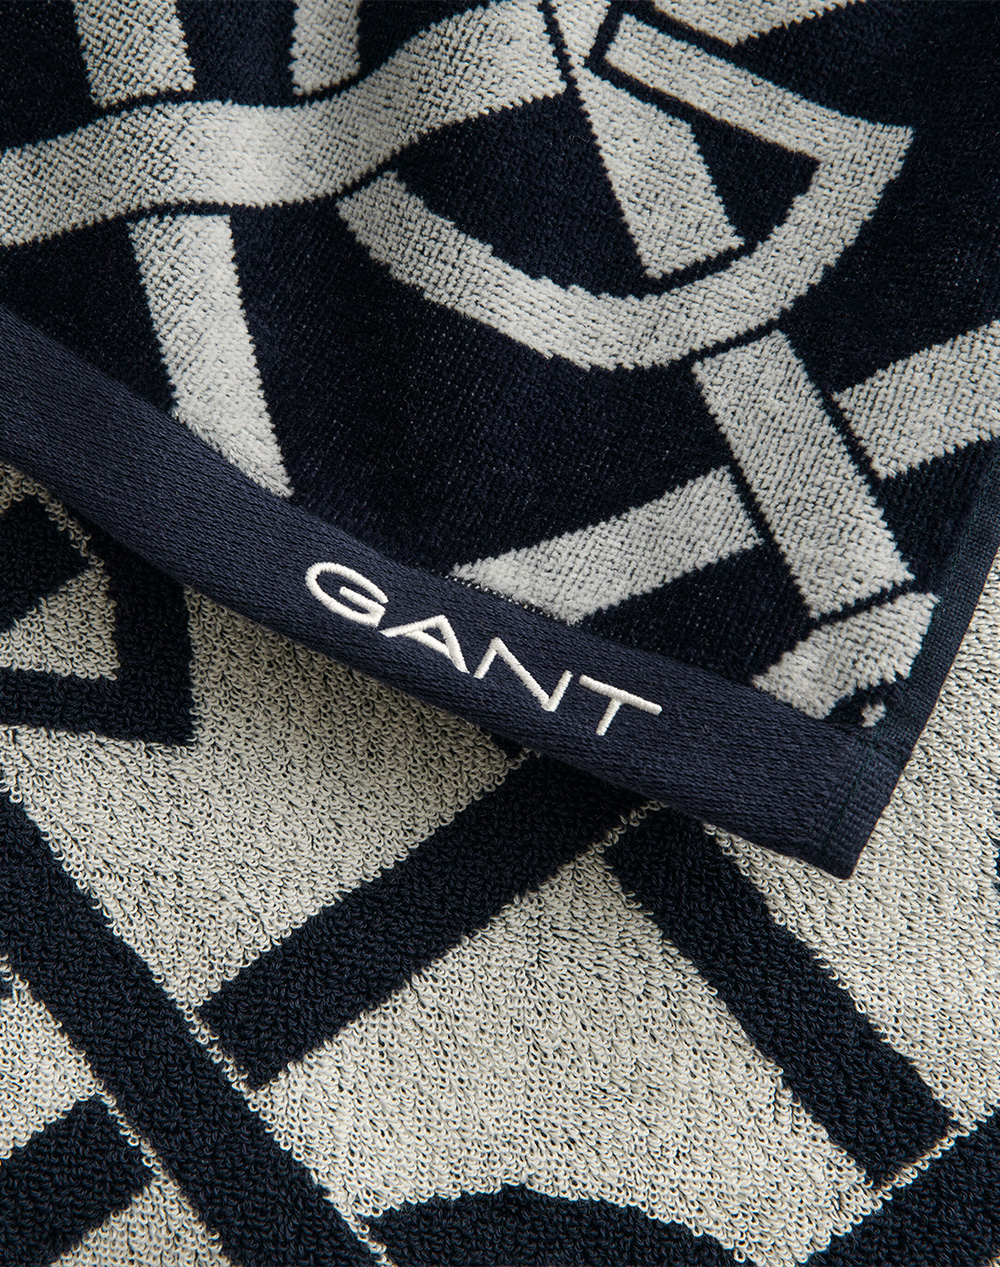 GANT G-PATTERN BEACH TOWEL (Dimensions: 100 x 180 cm)